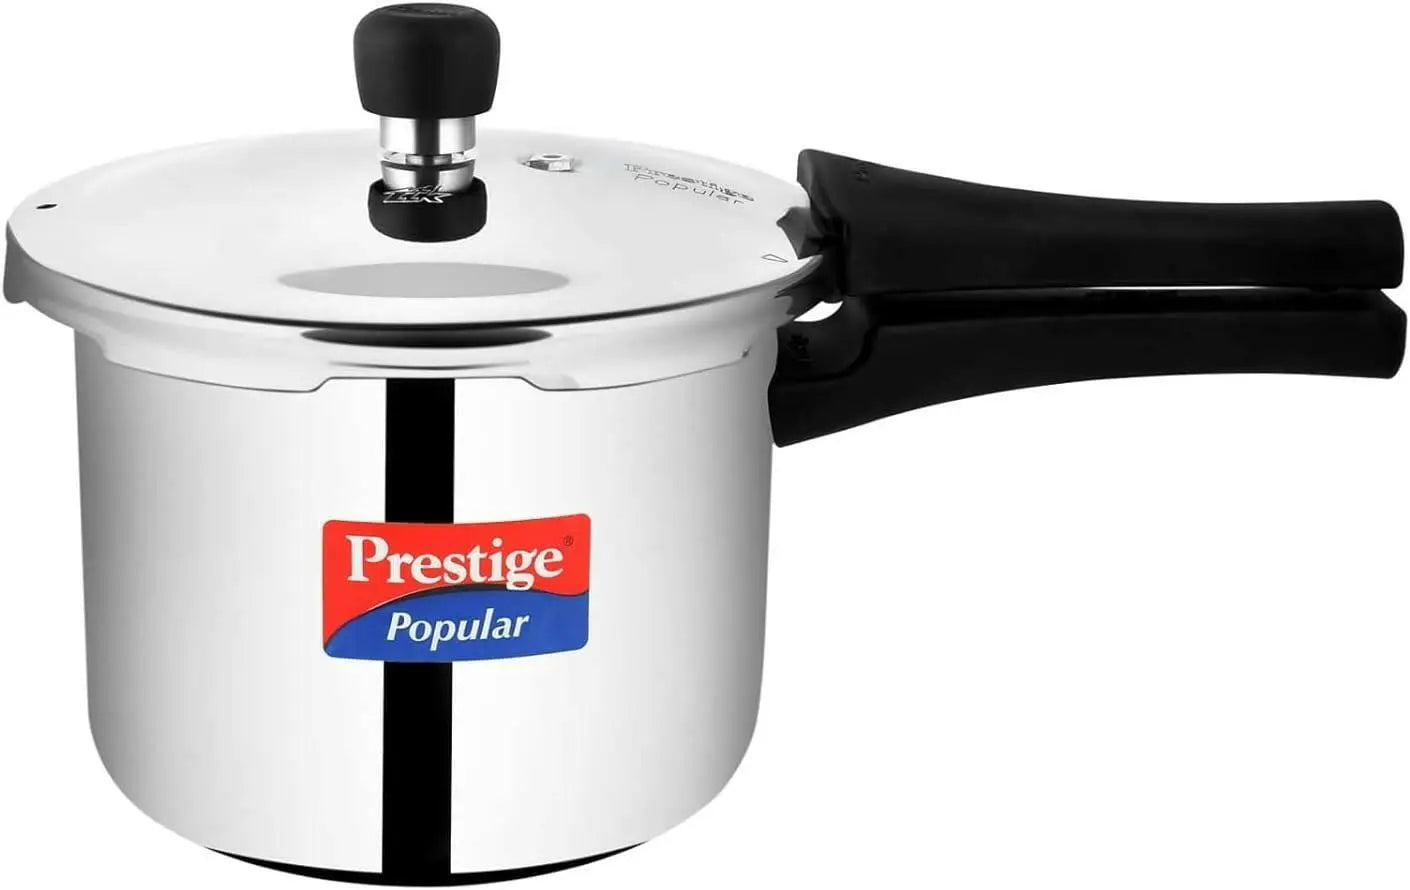 Prestige Popular Stainless Steel Pressure Cooker 3 Ltr | Silver